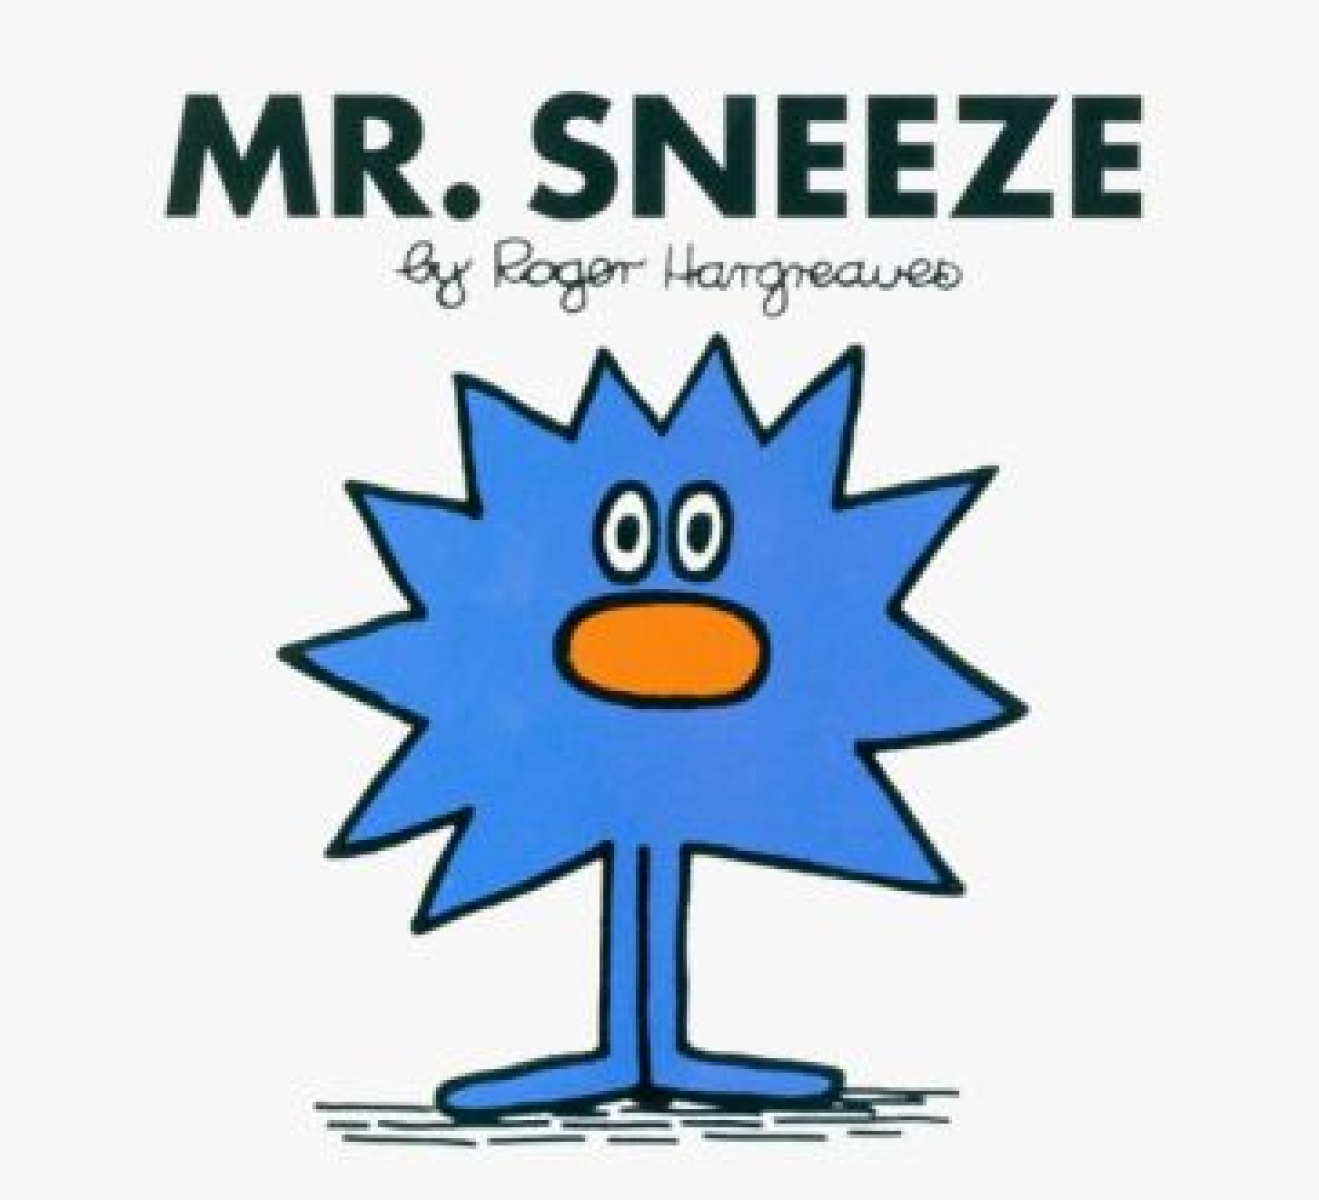 Hargreaves Roger Mr. Sneeze 